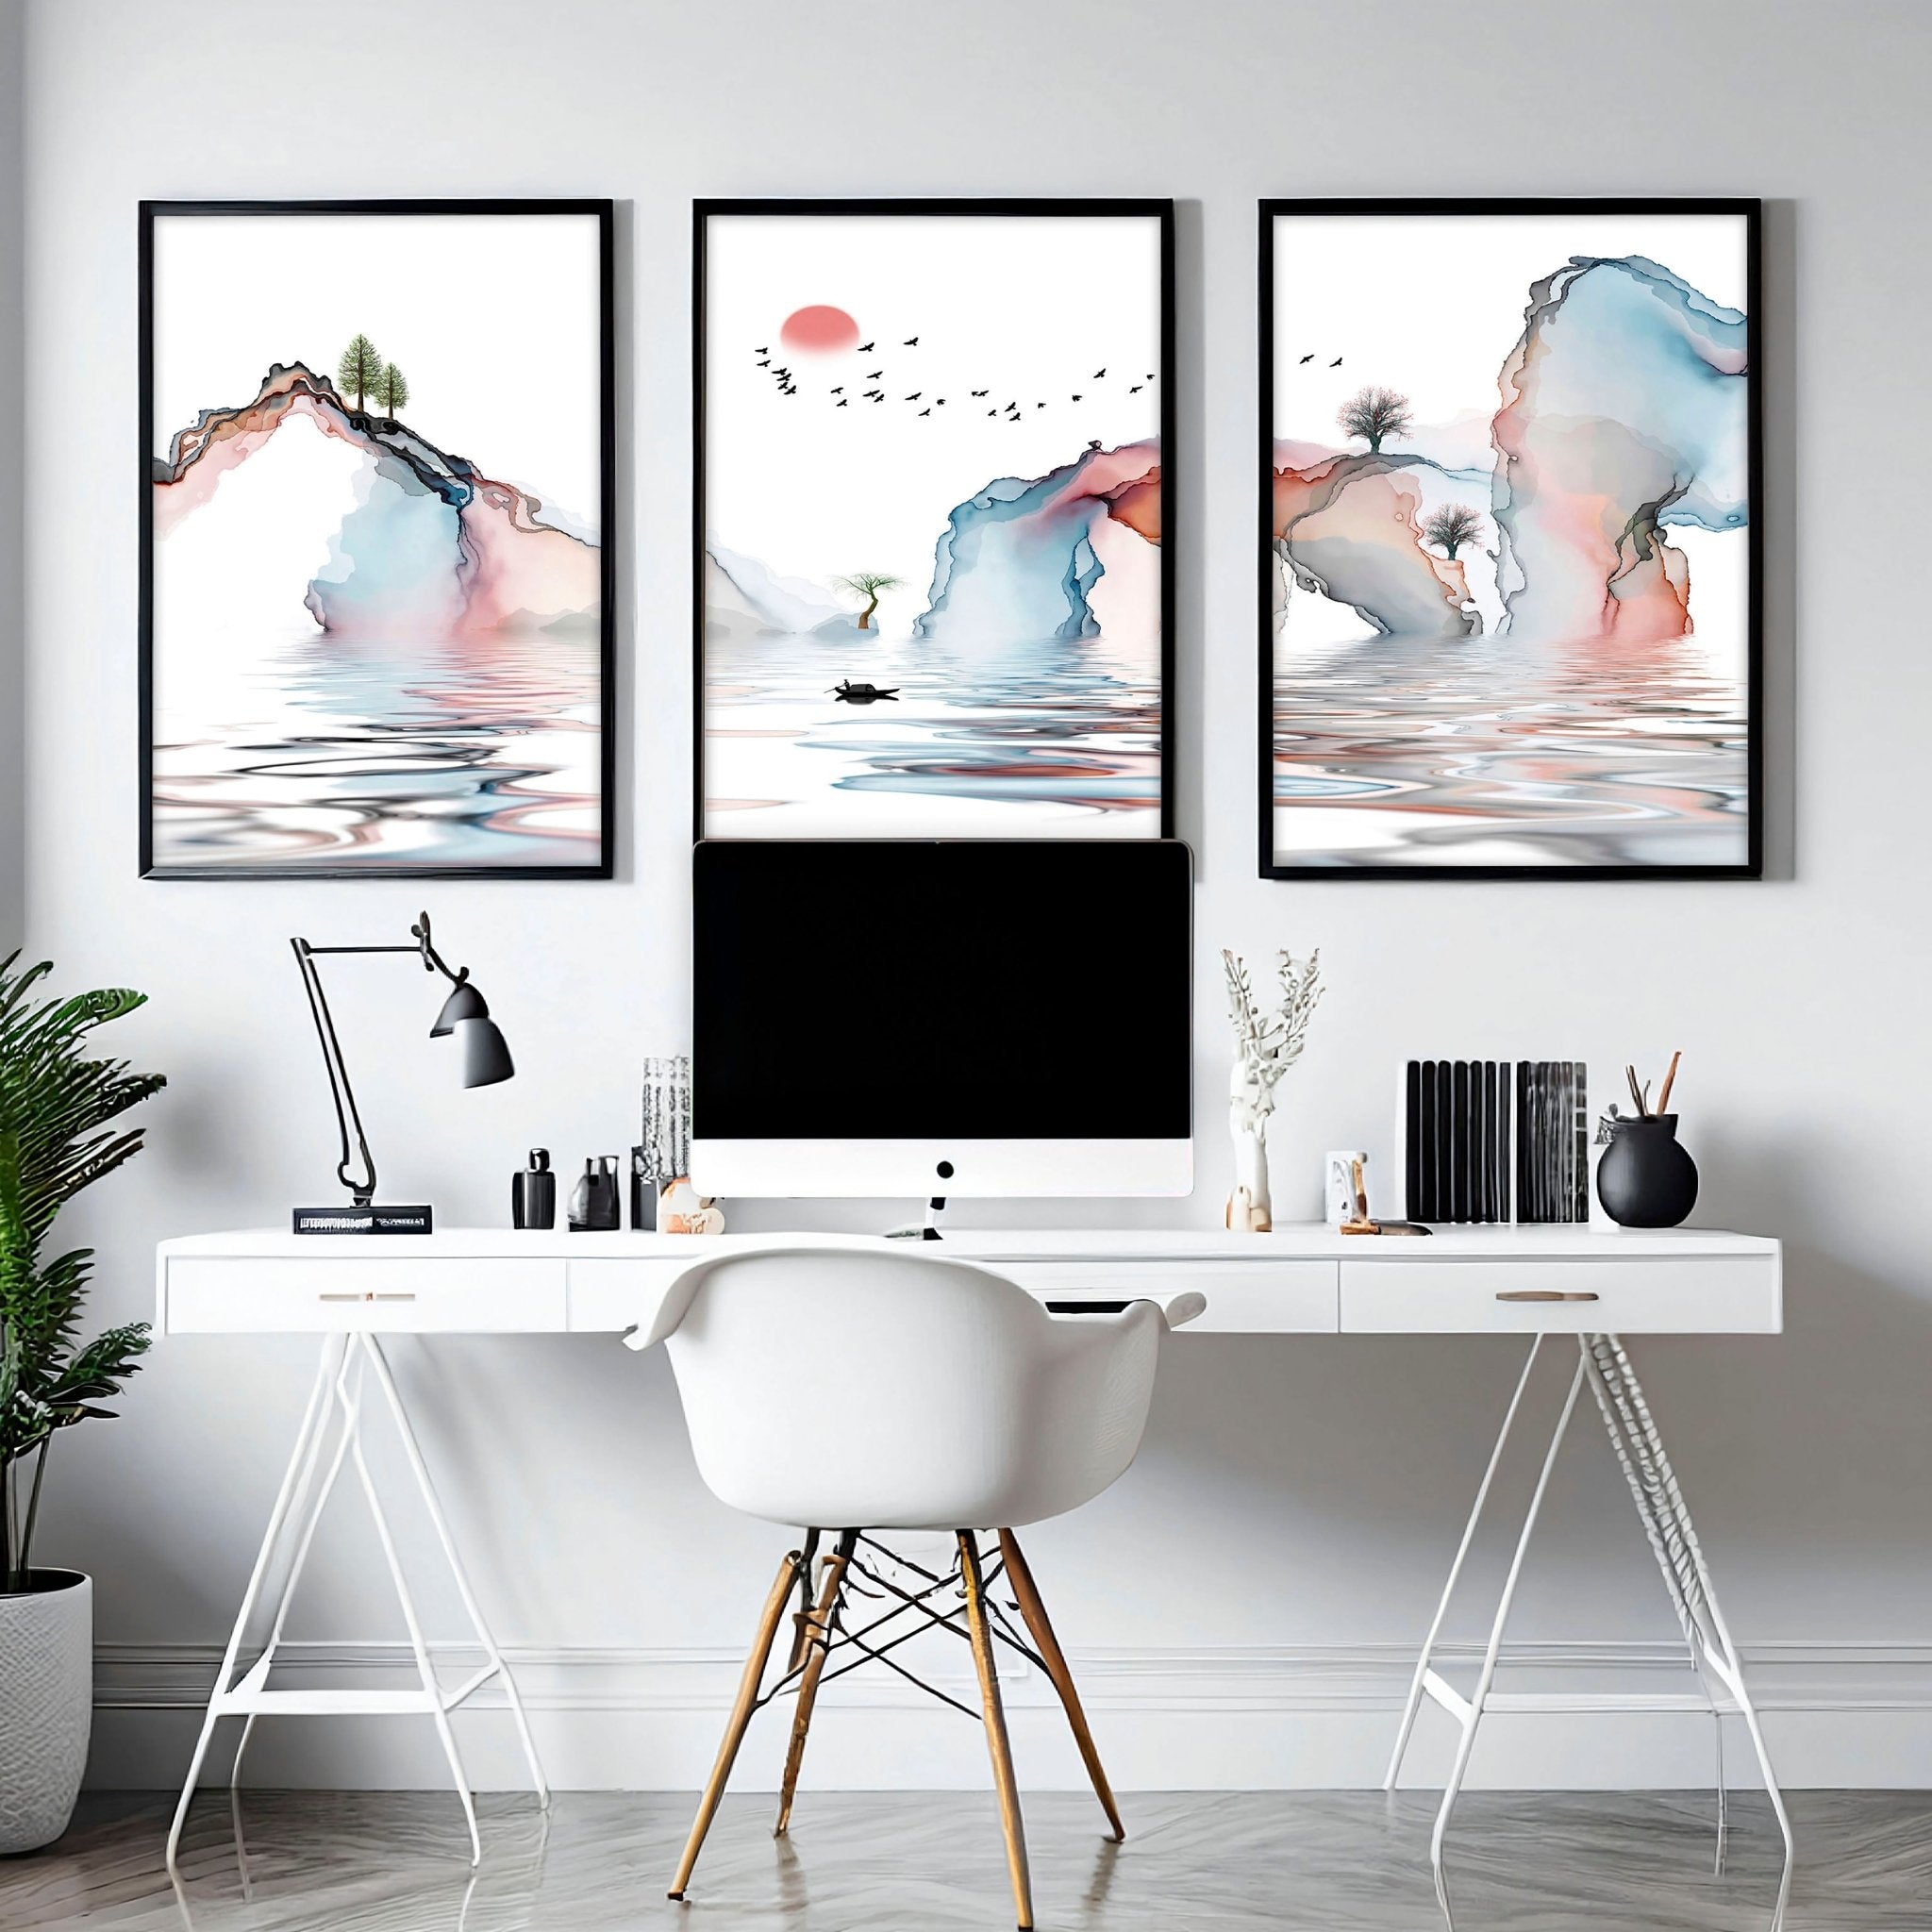 Prints for Office walls | set of 3 wall art prints